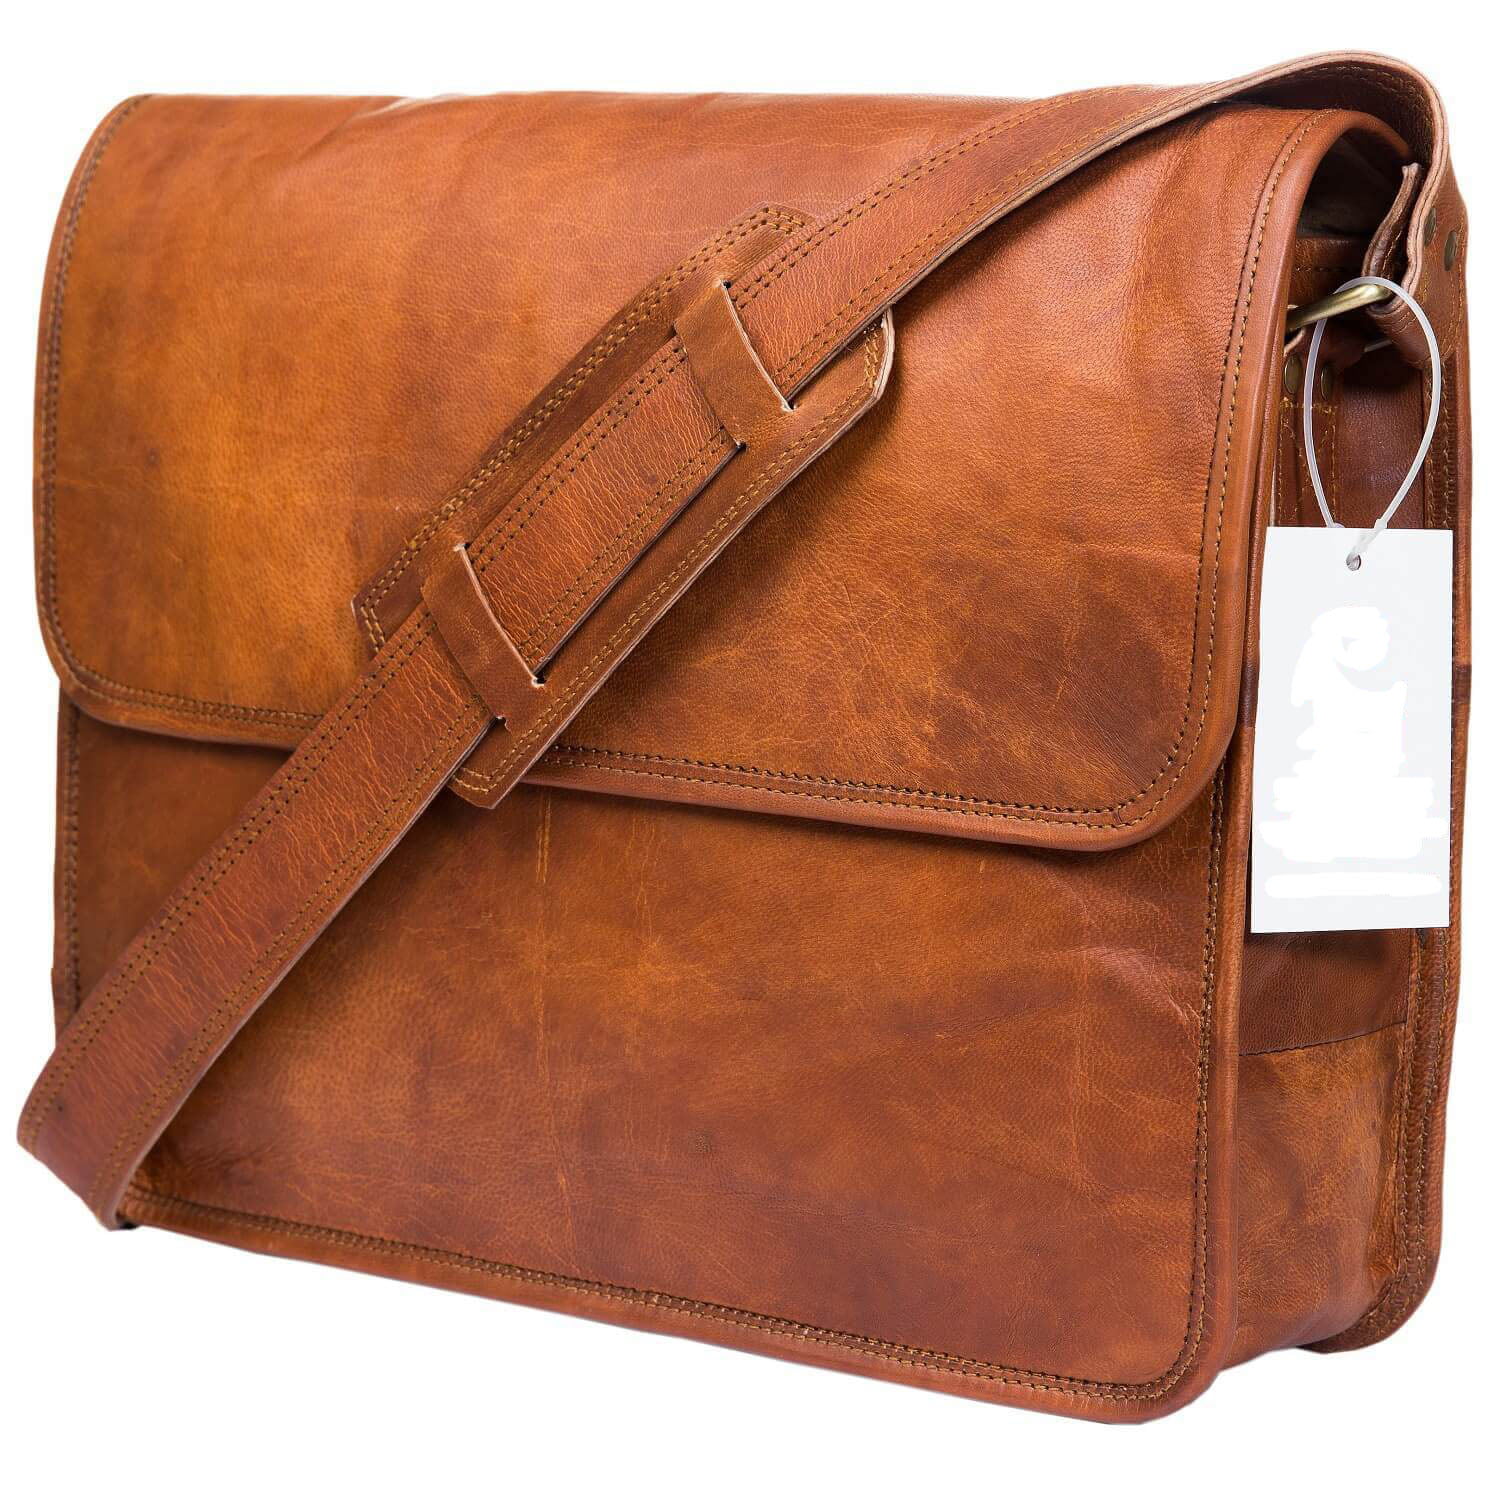 LV Leather bags for men office use for laptop unisex bag Messenger Shoulder Bags for Men's Office 16 inch 18 Liters Capacity (Dimension-L-16 X H